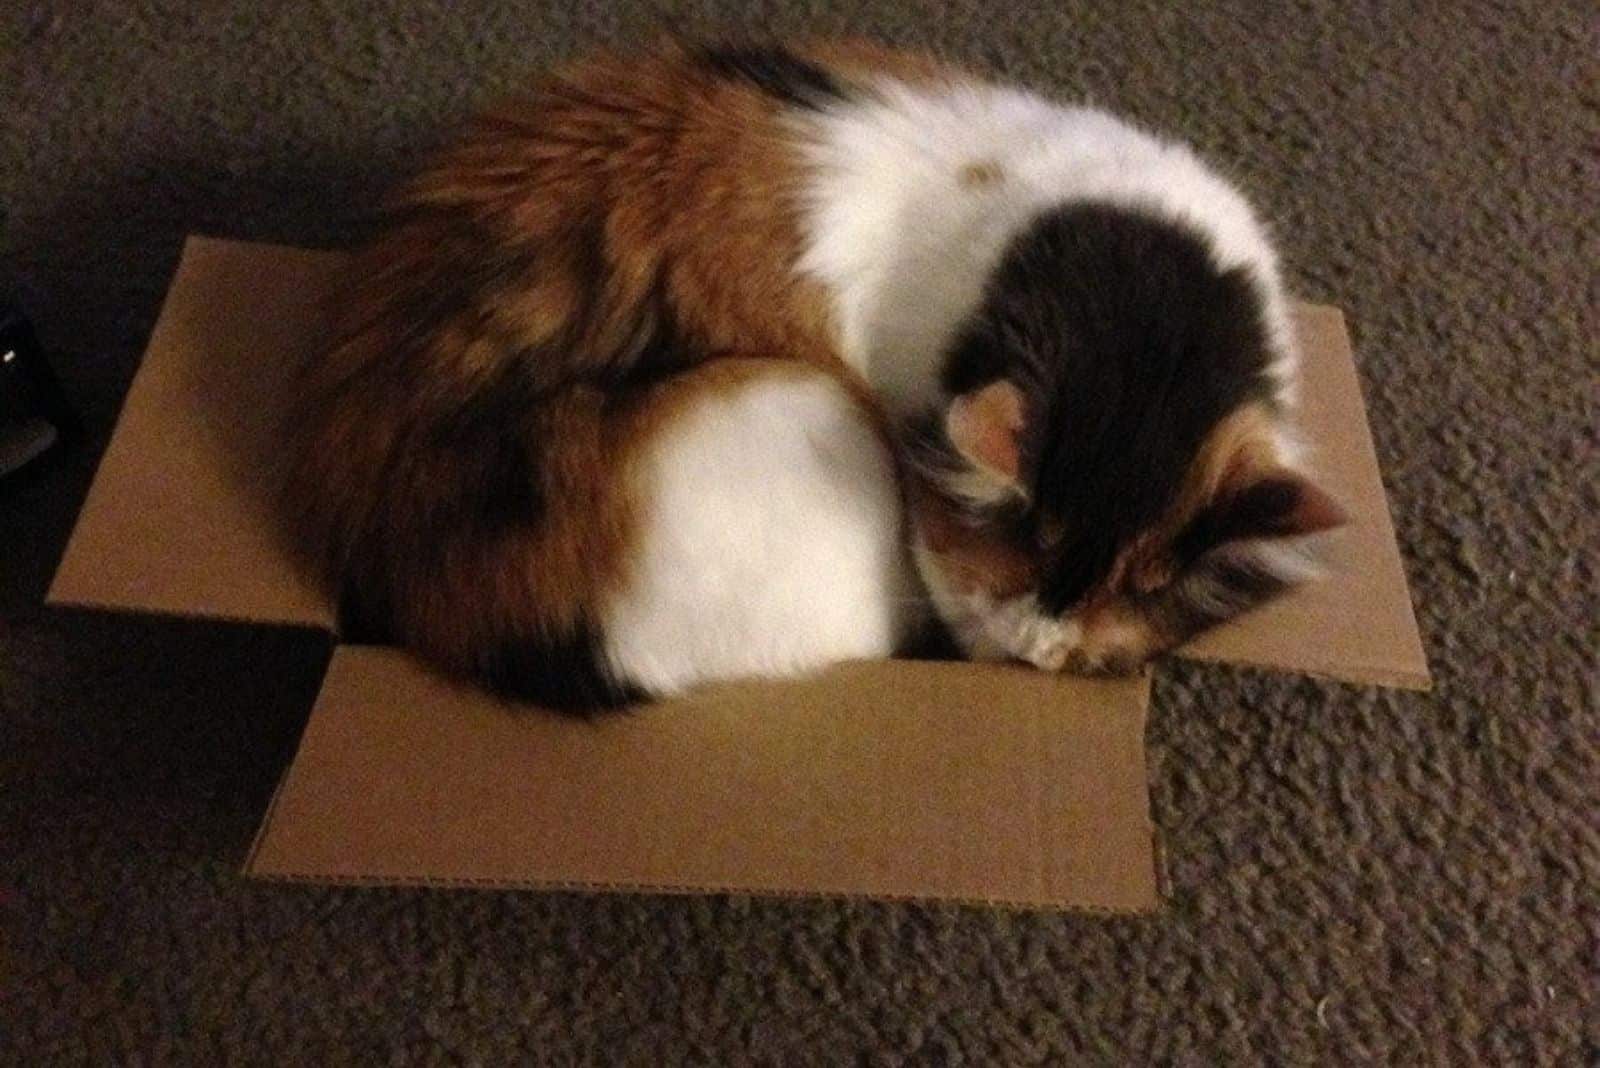 cat curled up in a box